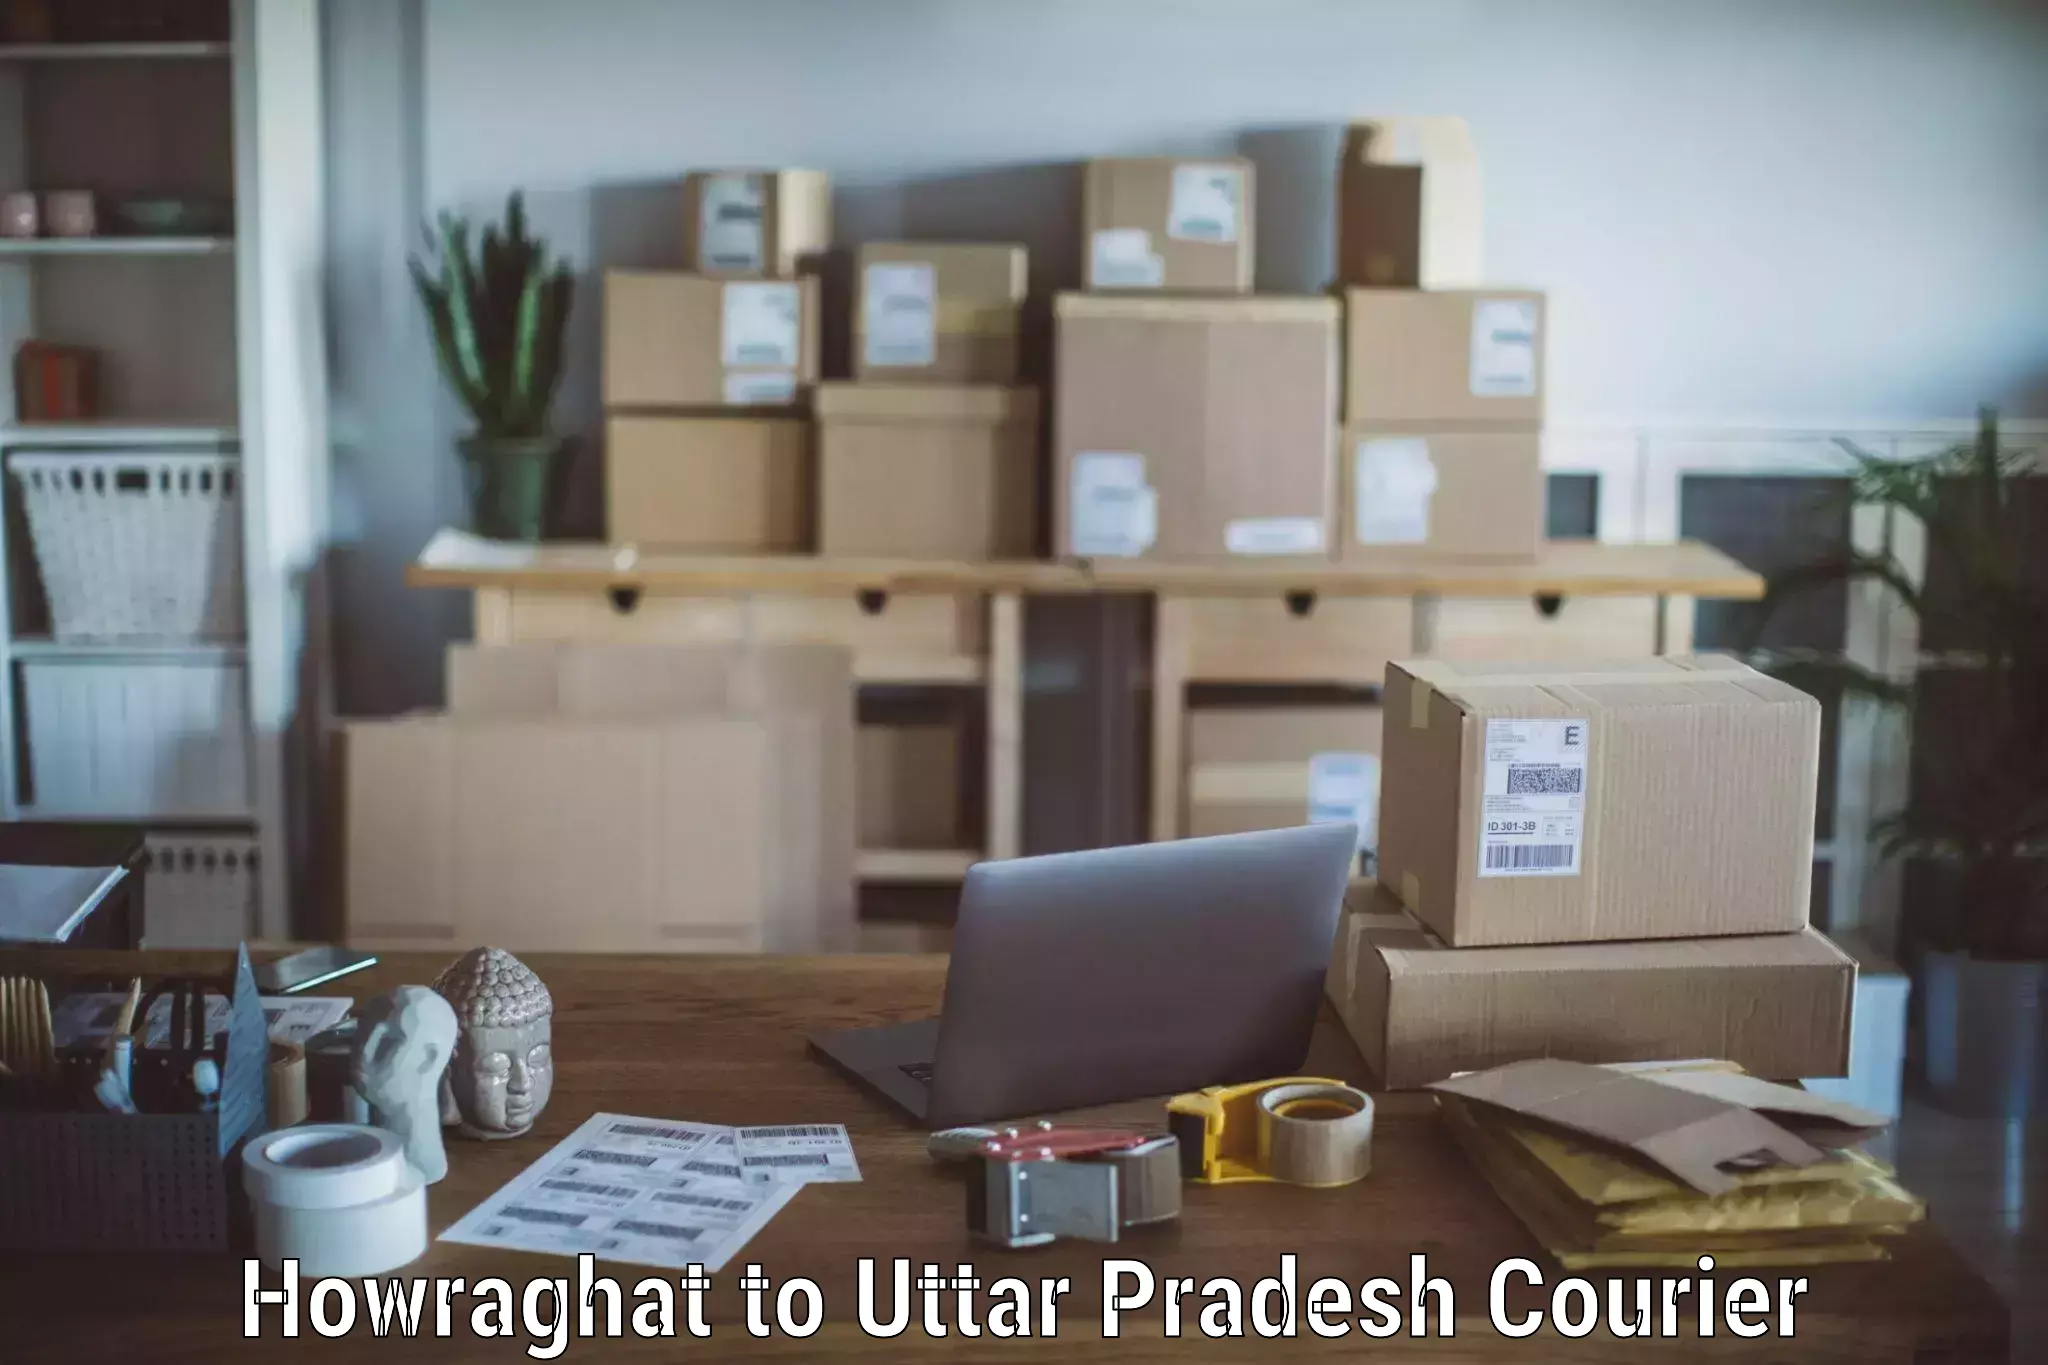 Reliable movers Howraghat to Uttar Pradesh